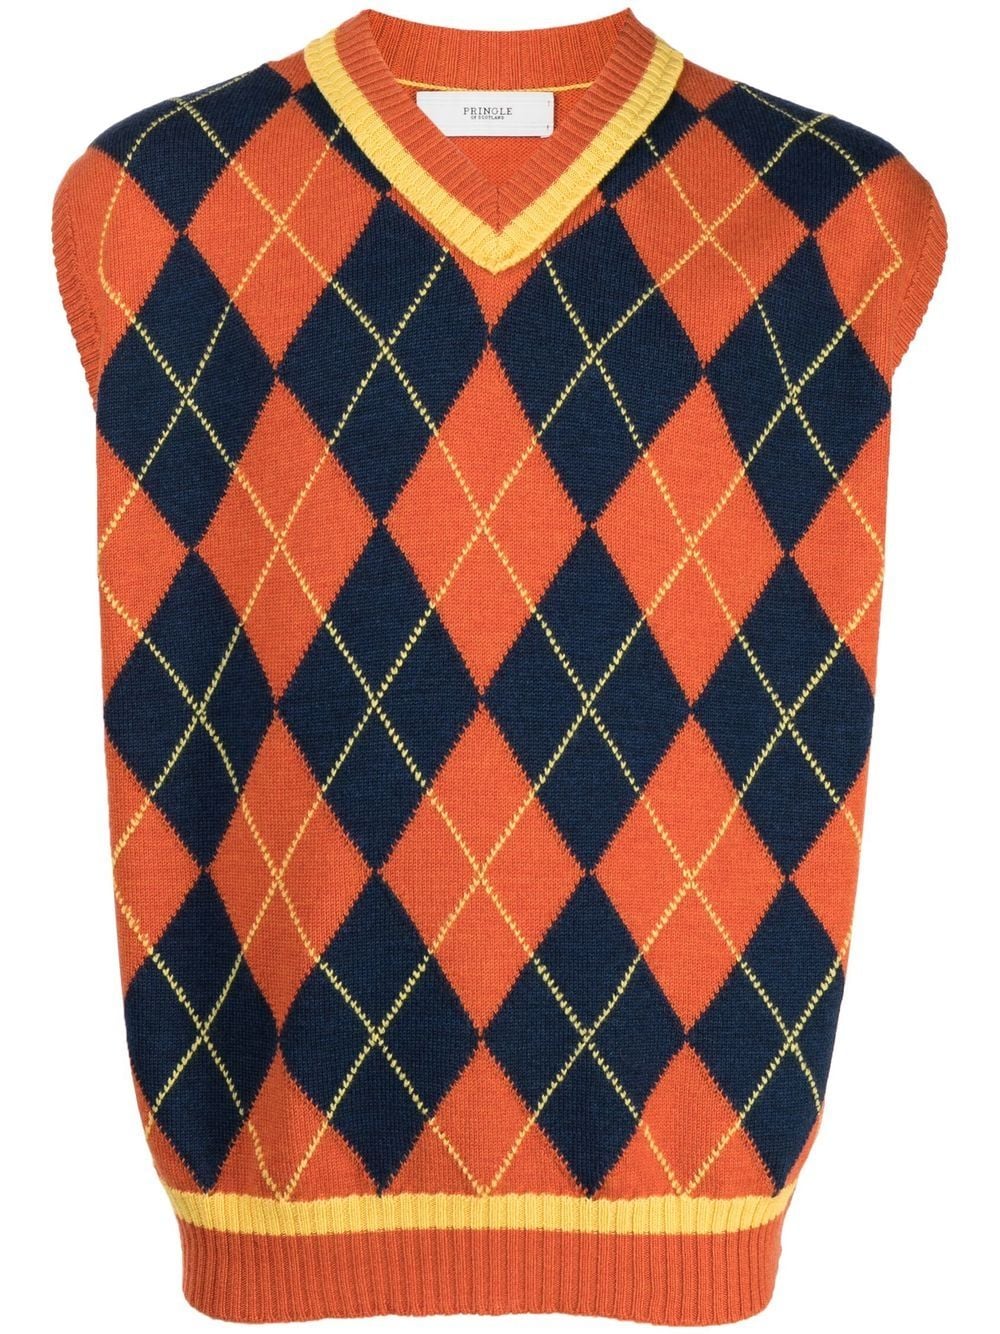 Pringle of Scotland argyle knit jumper - Orange von Pringle of Scotland